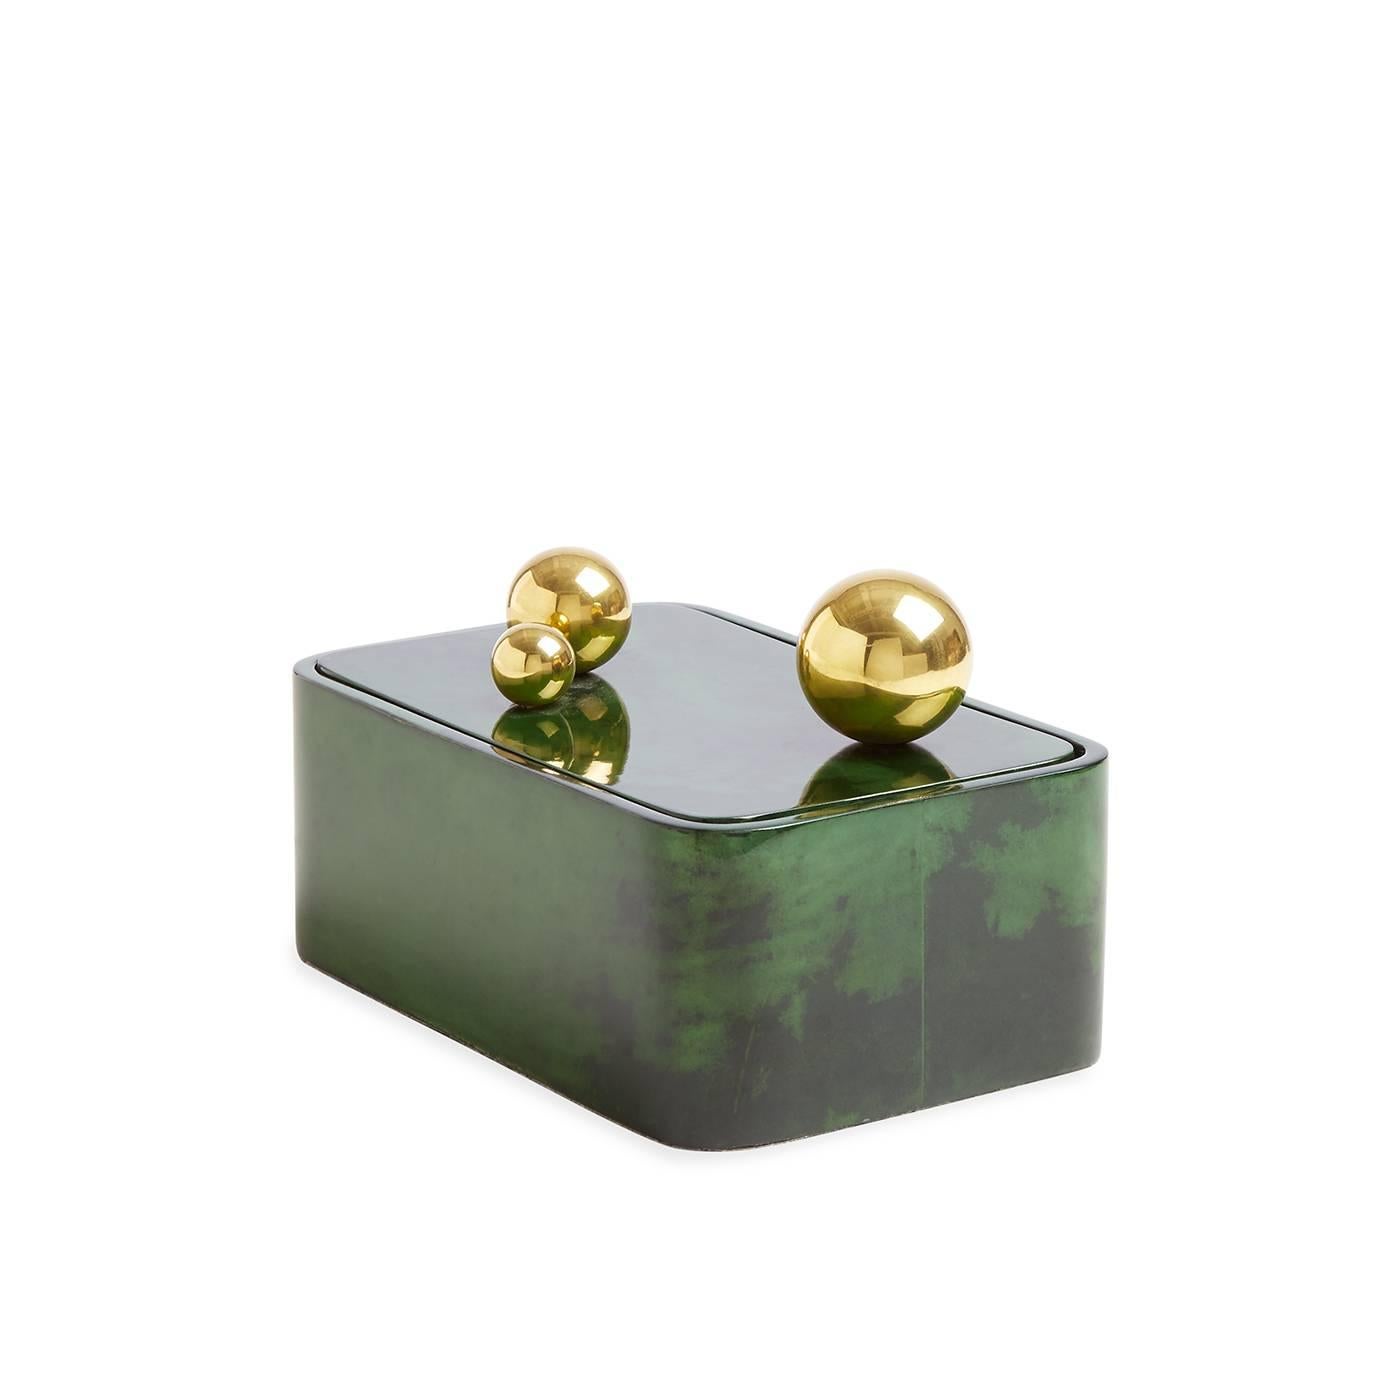 American Trocadero Lacquered Goatskin Box in Jade